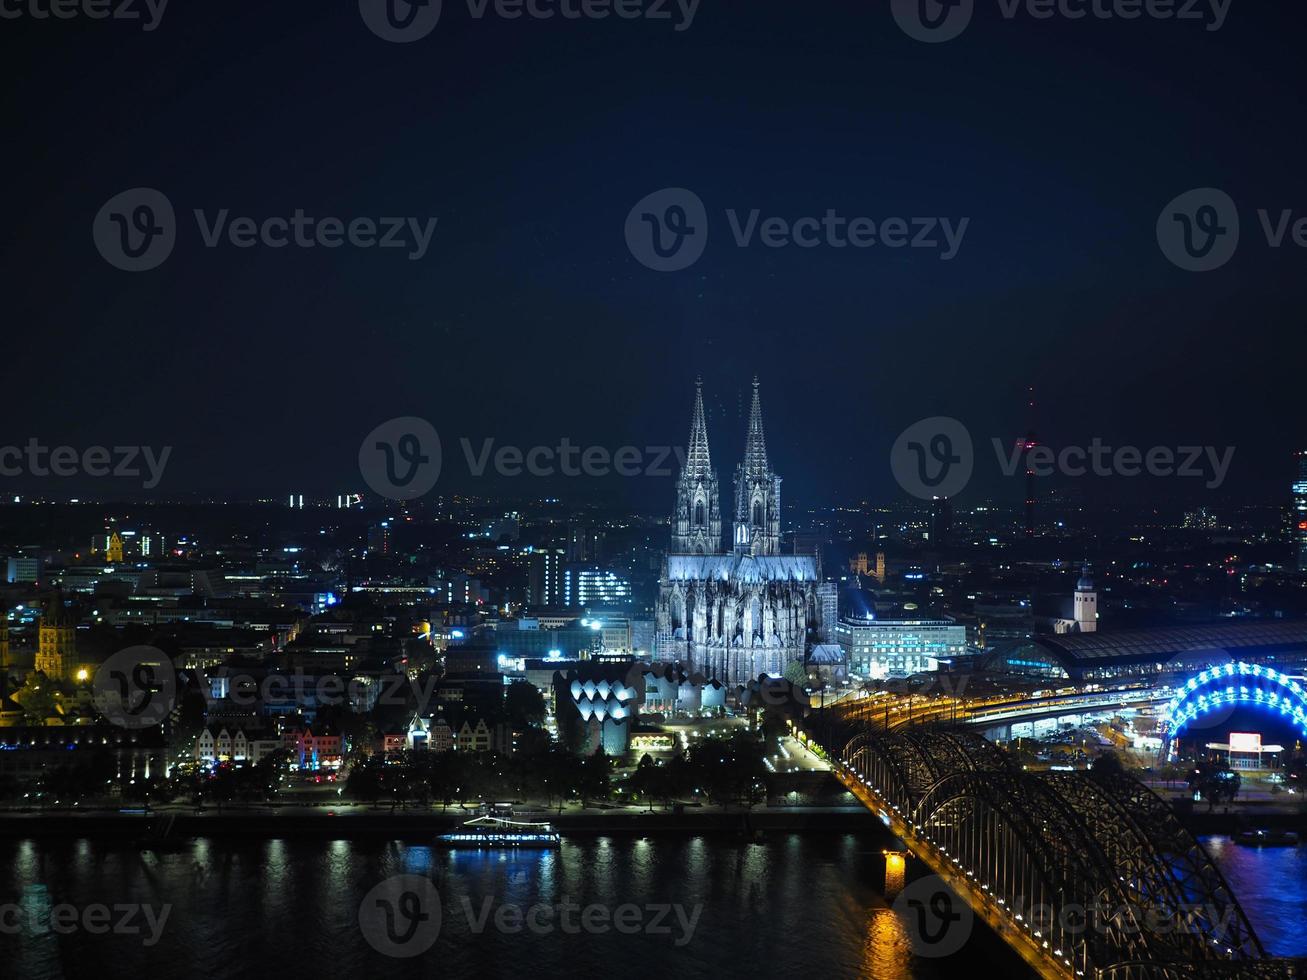 nachtzicht vanuit de lucht op de Sint-Pietersbasiliek en de Hohenzollern-brug foto